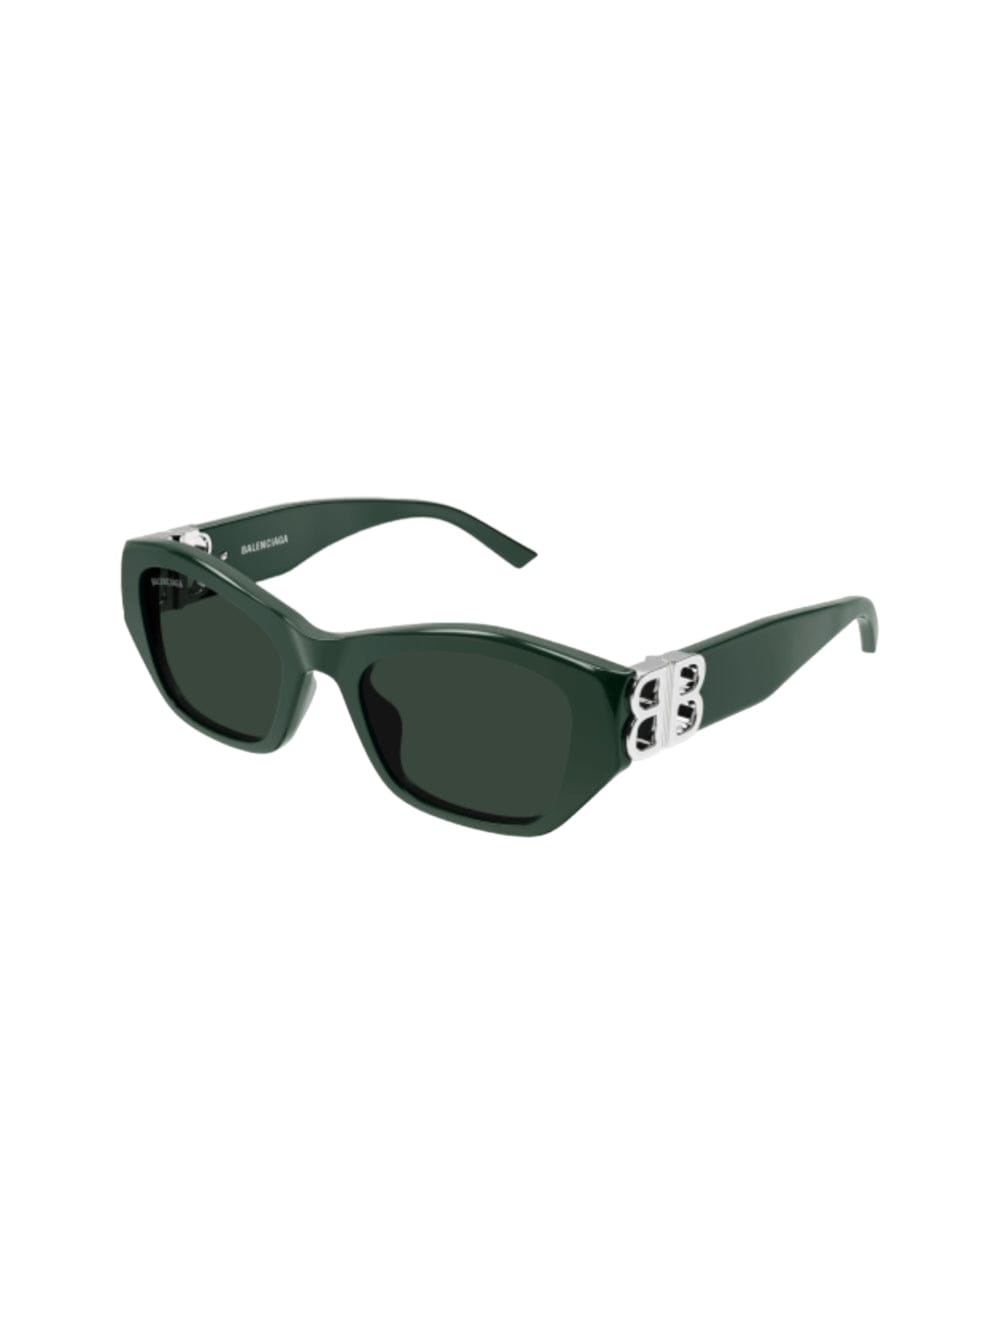 Balenciaga Bb 0311 - Green Sunglasses